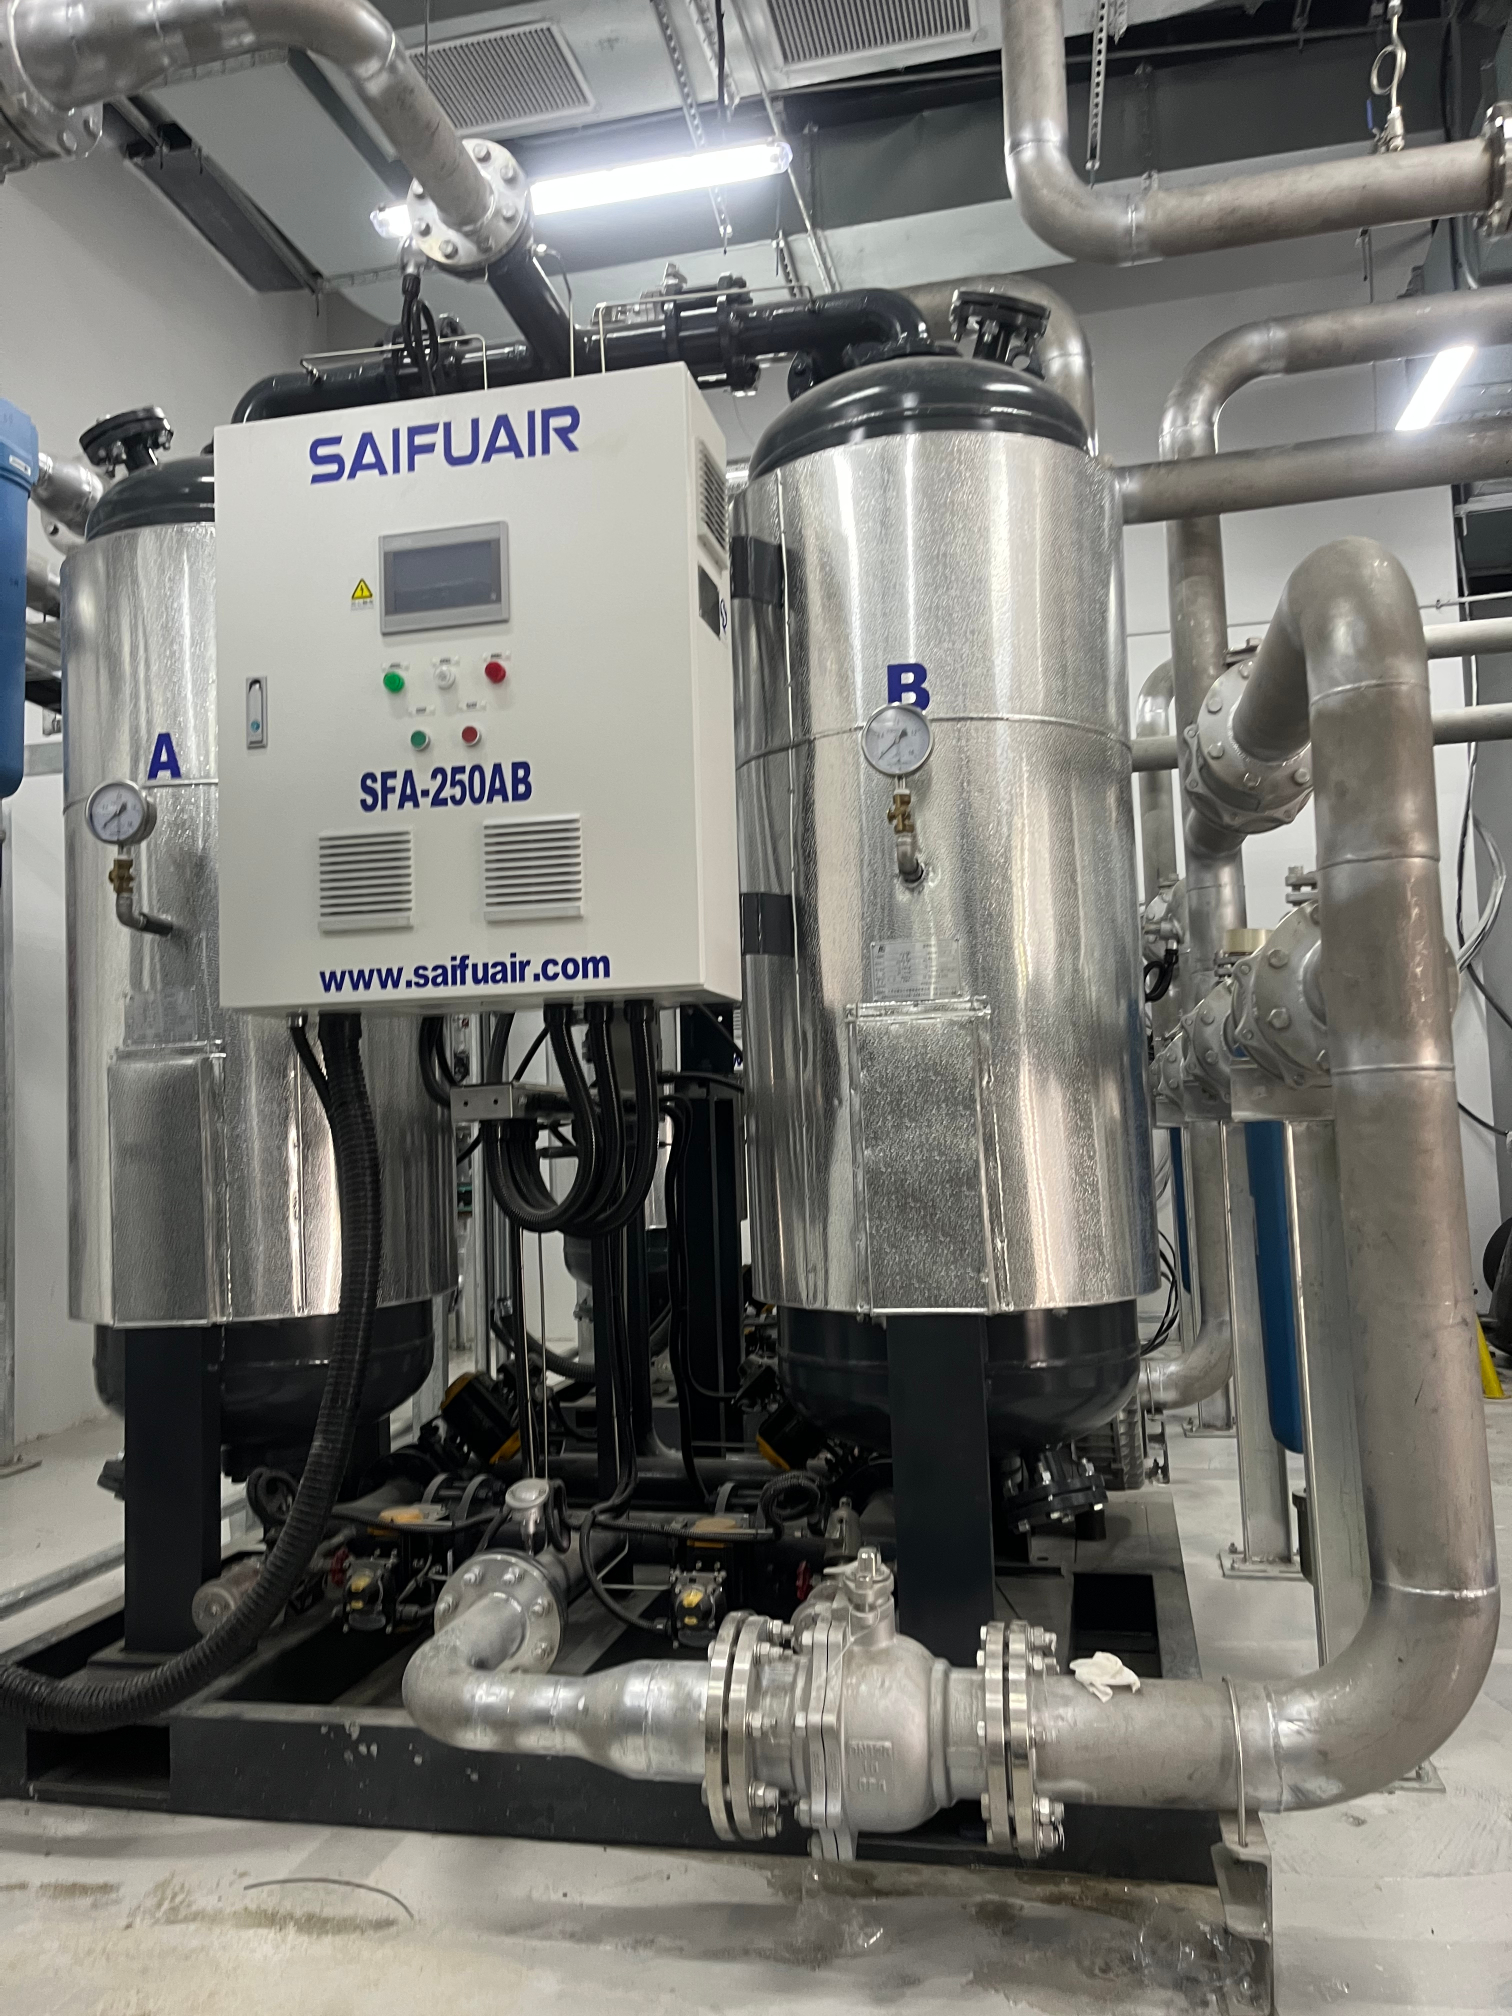 SAIFUAIR hand in hand with biotechnology company blast heat suction machine strong circle